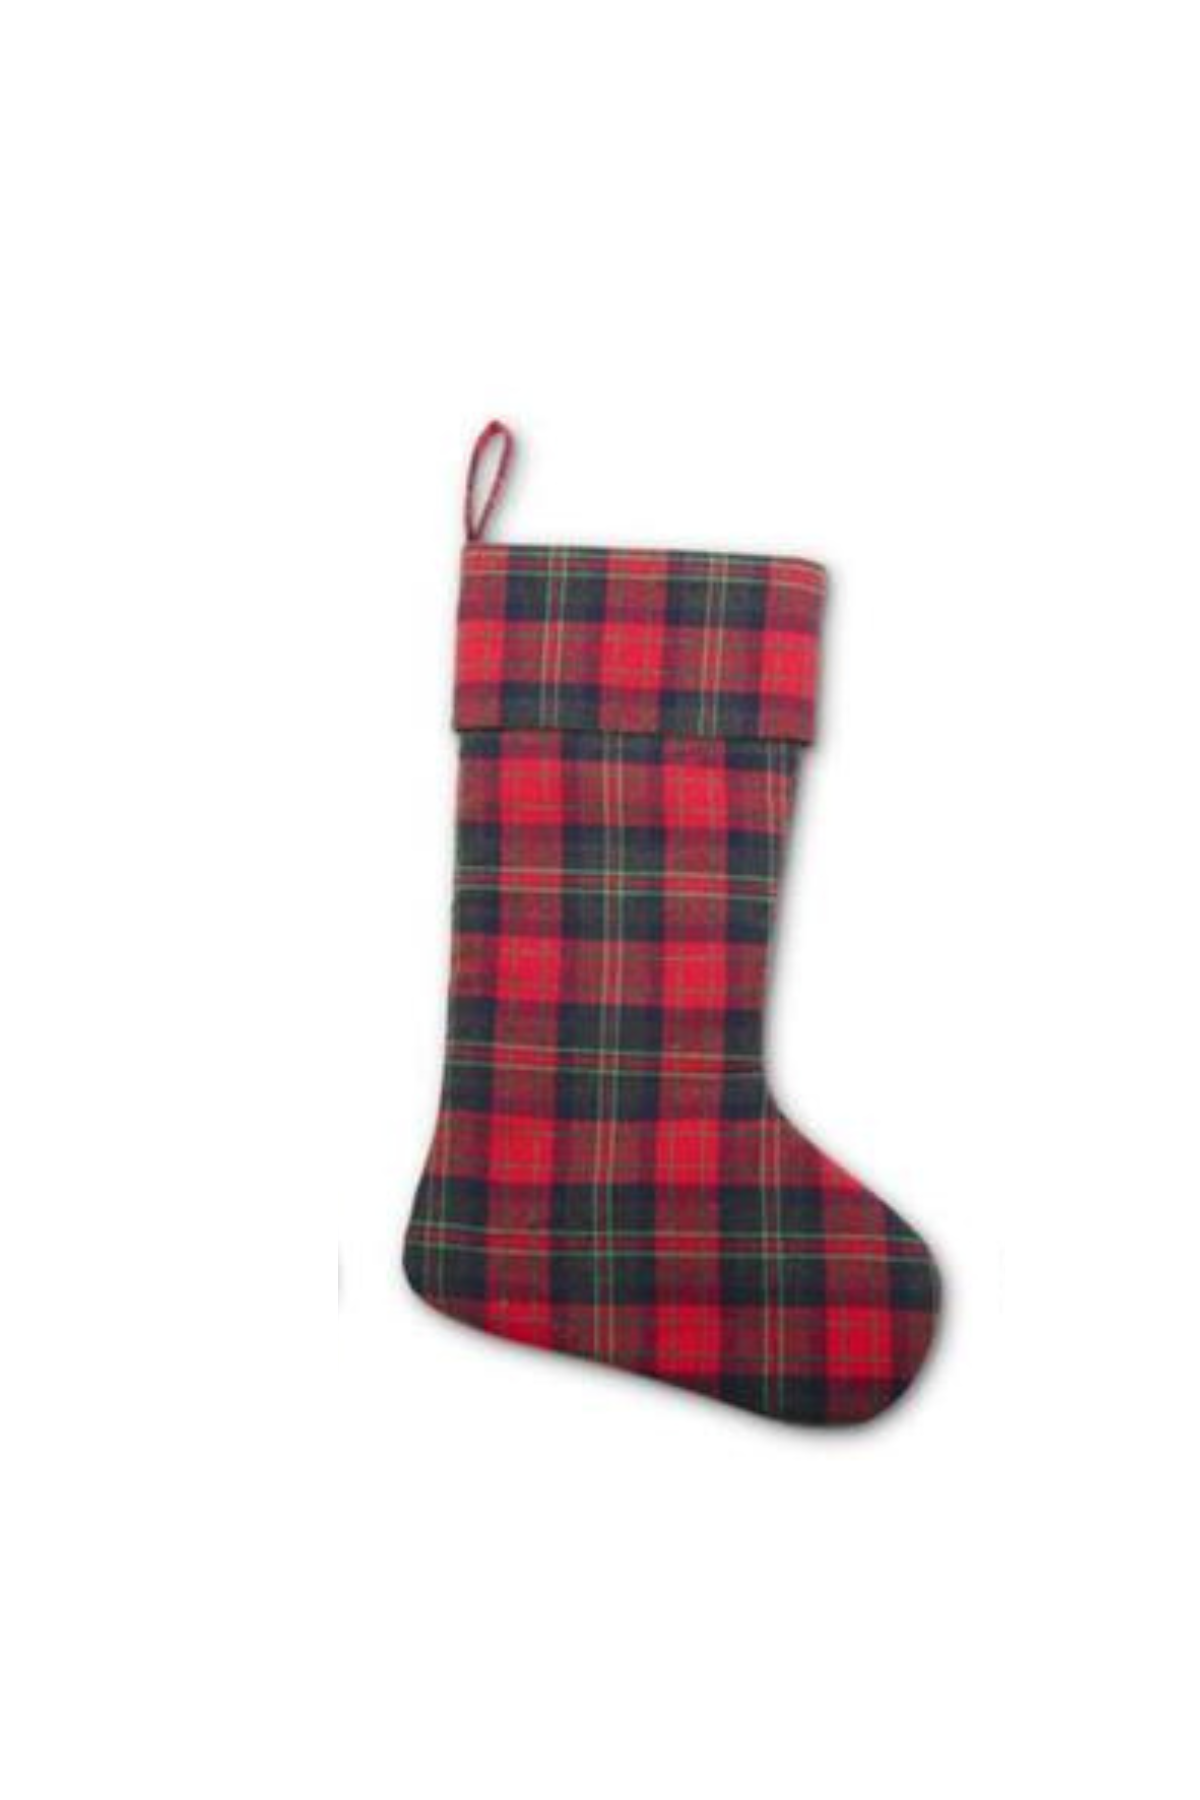 Assorted Plaid Traditional Christmas Stockings